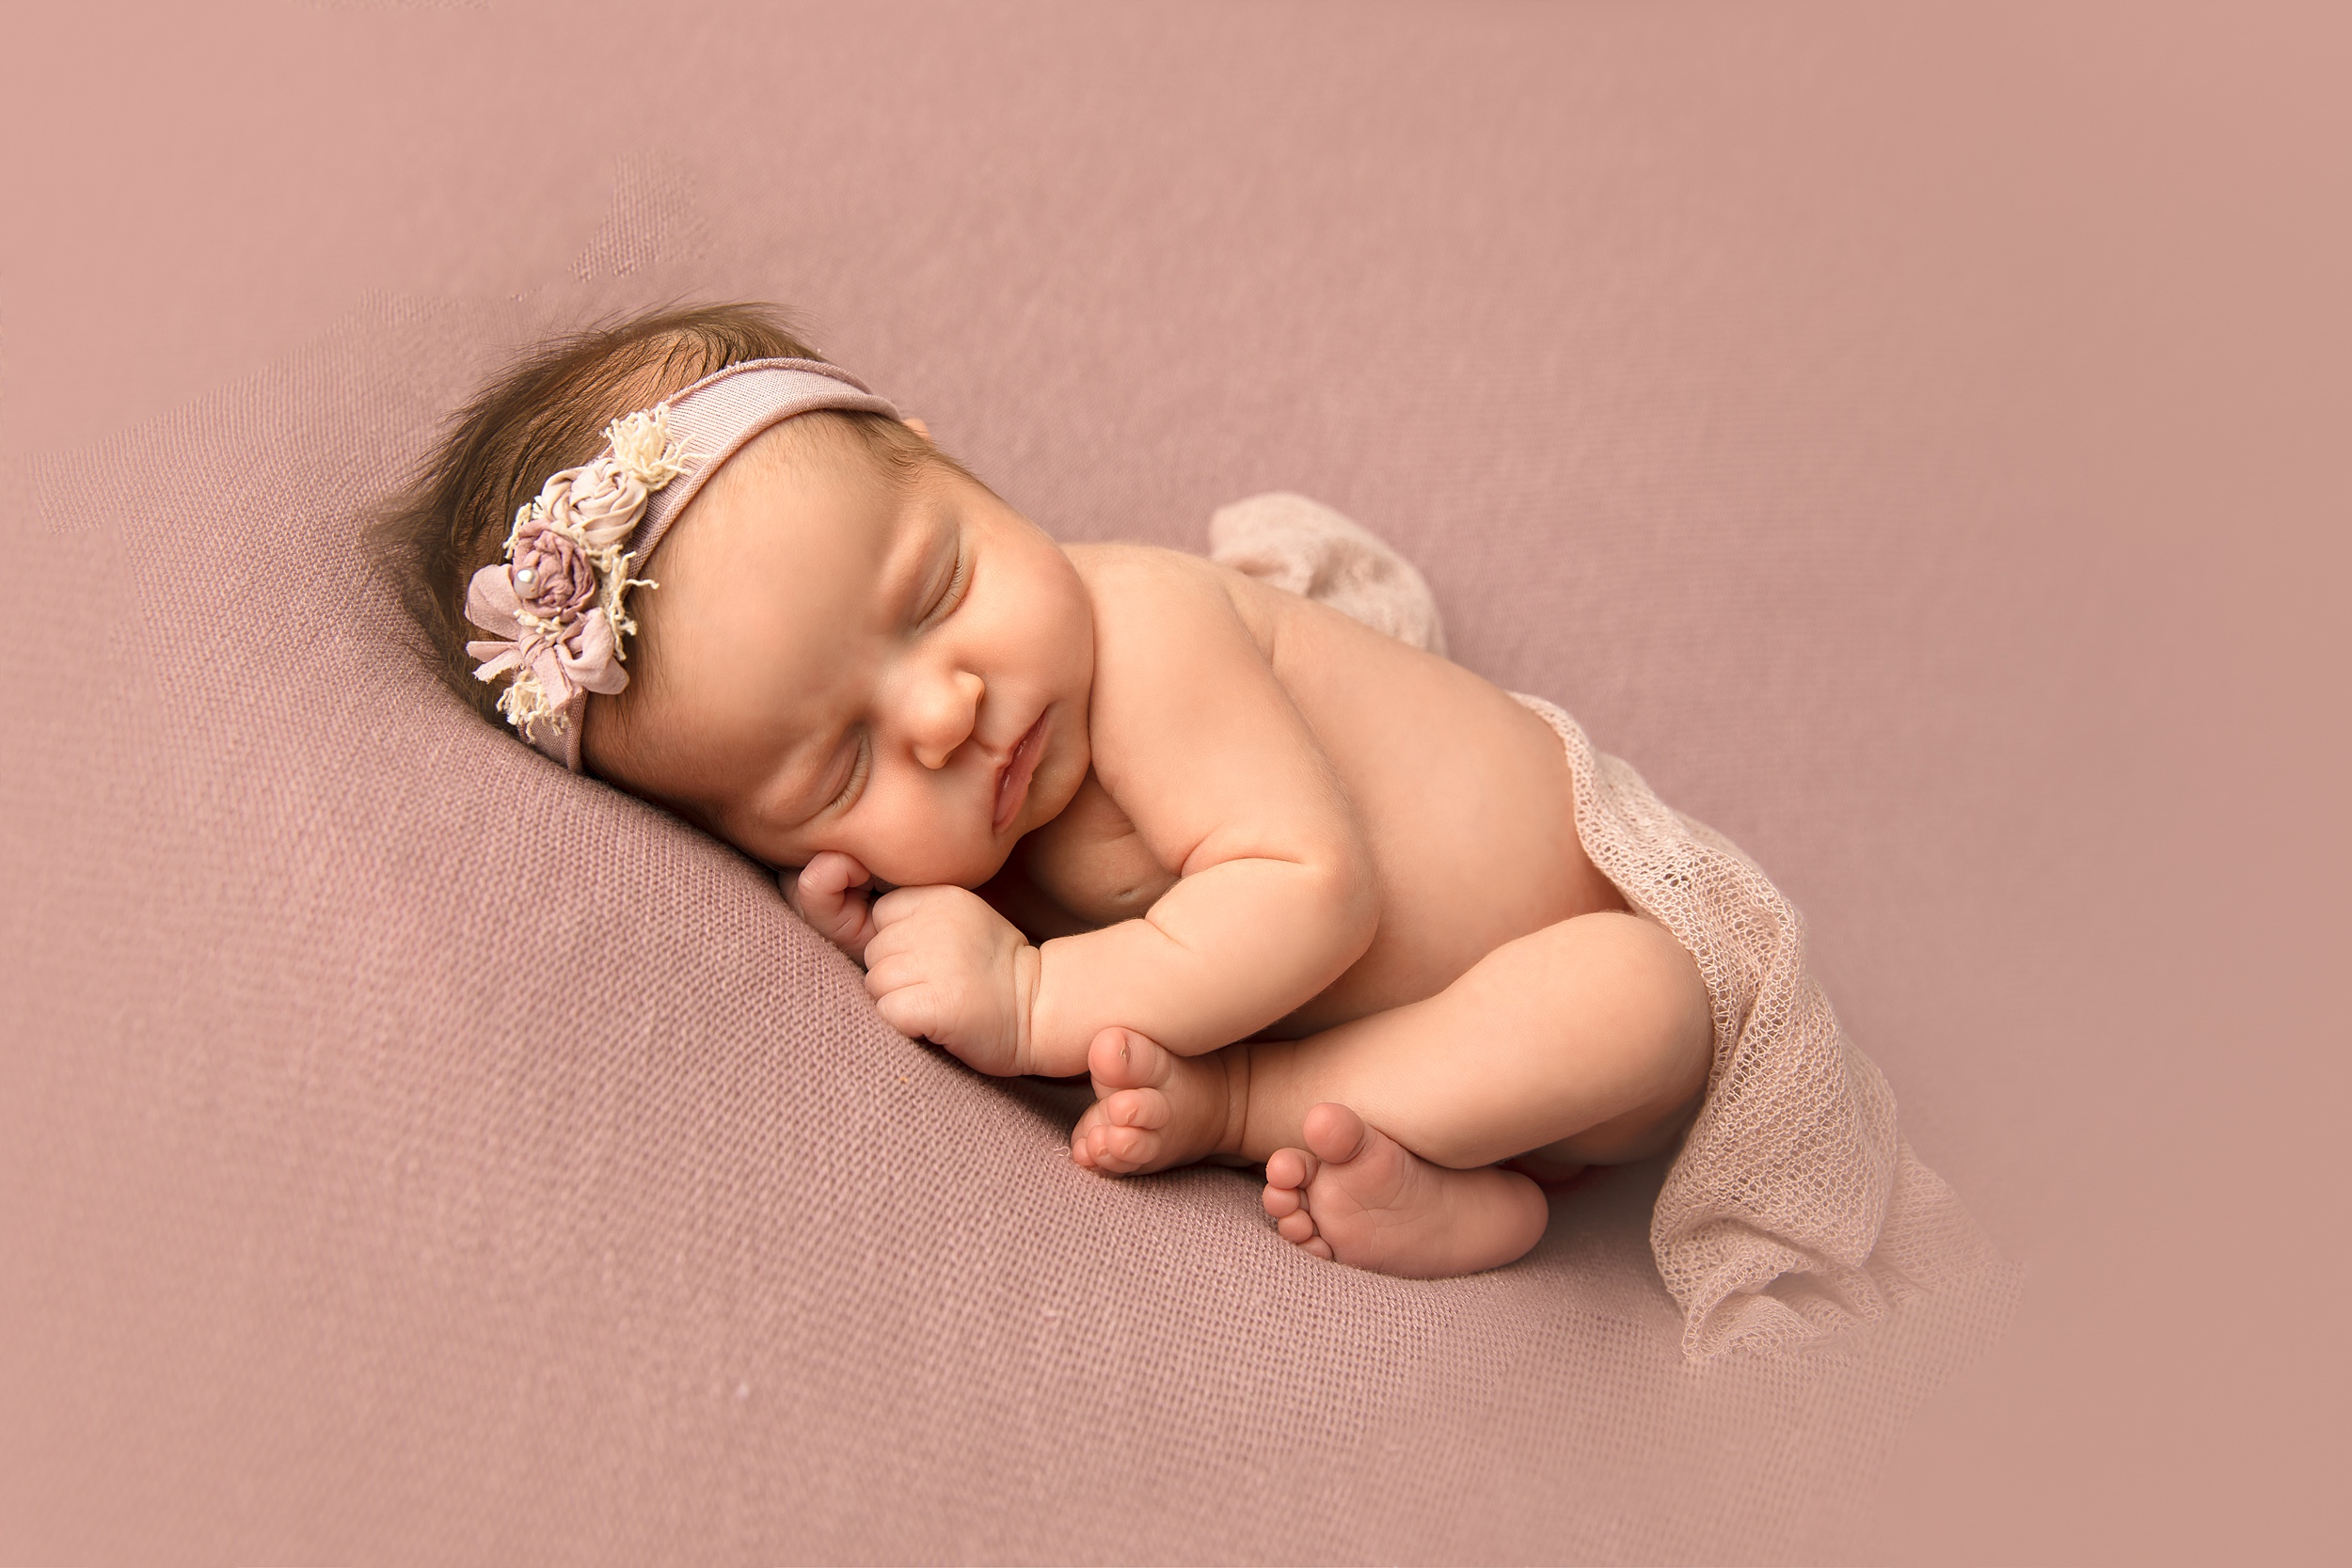 A newborn baby sleeps on a pink pad in a fabric headband raleigh nannies